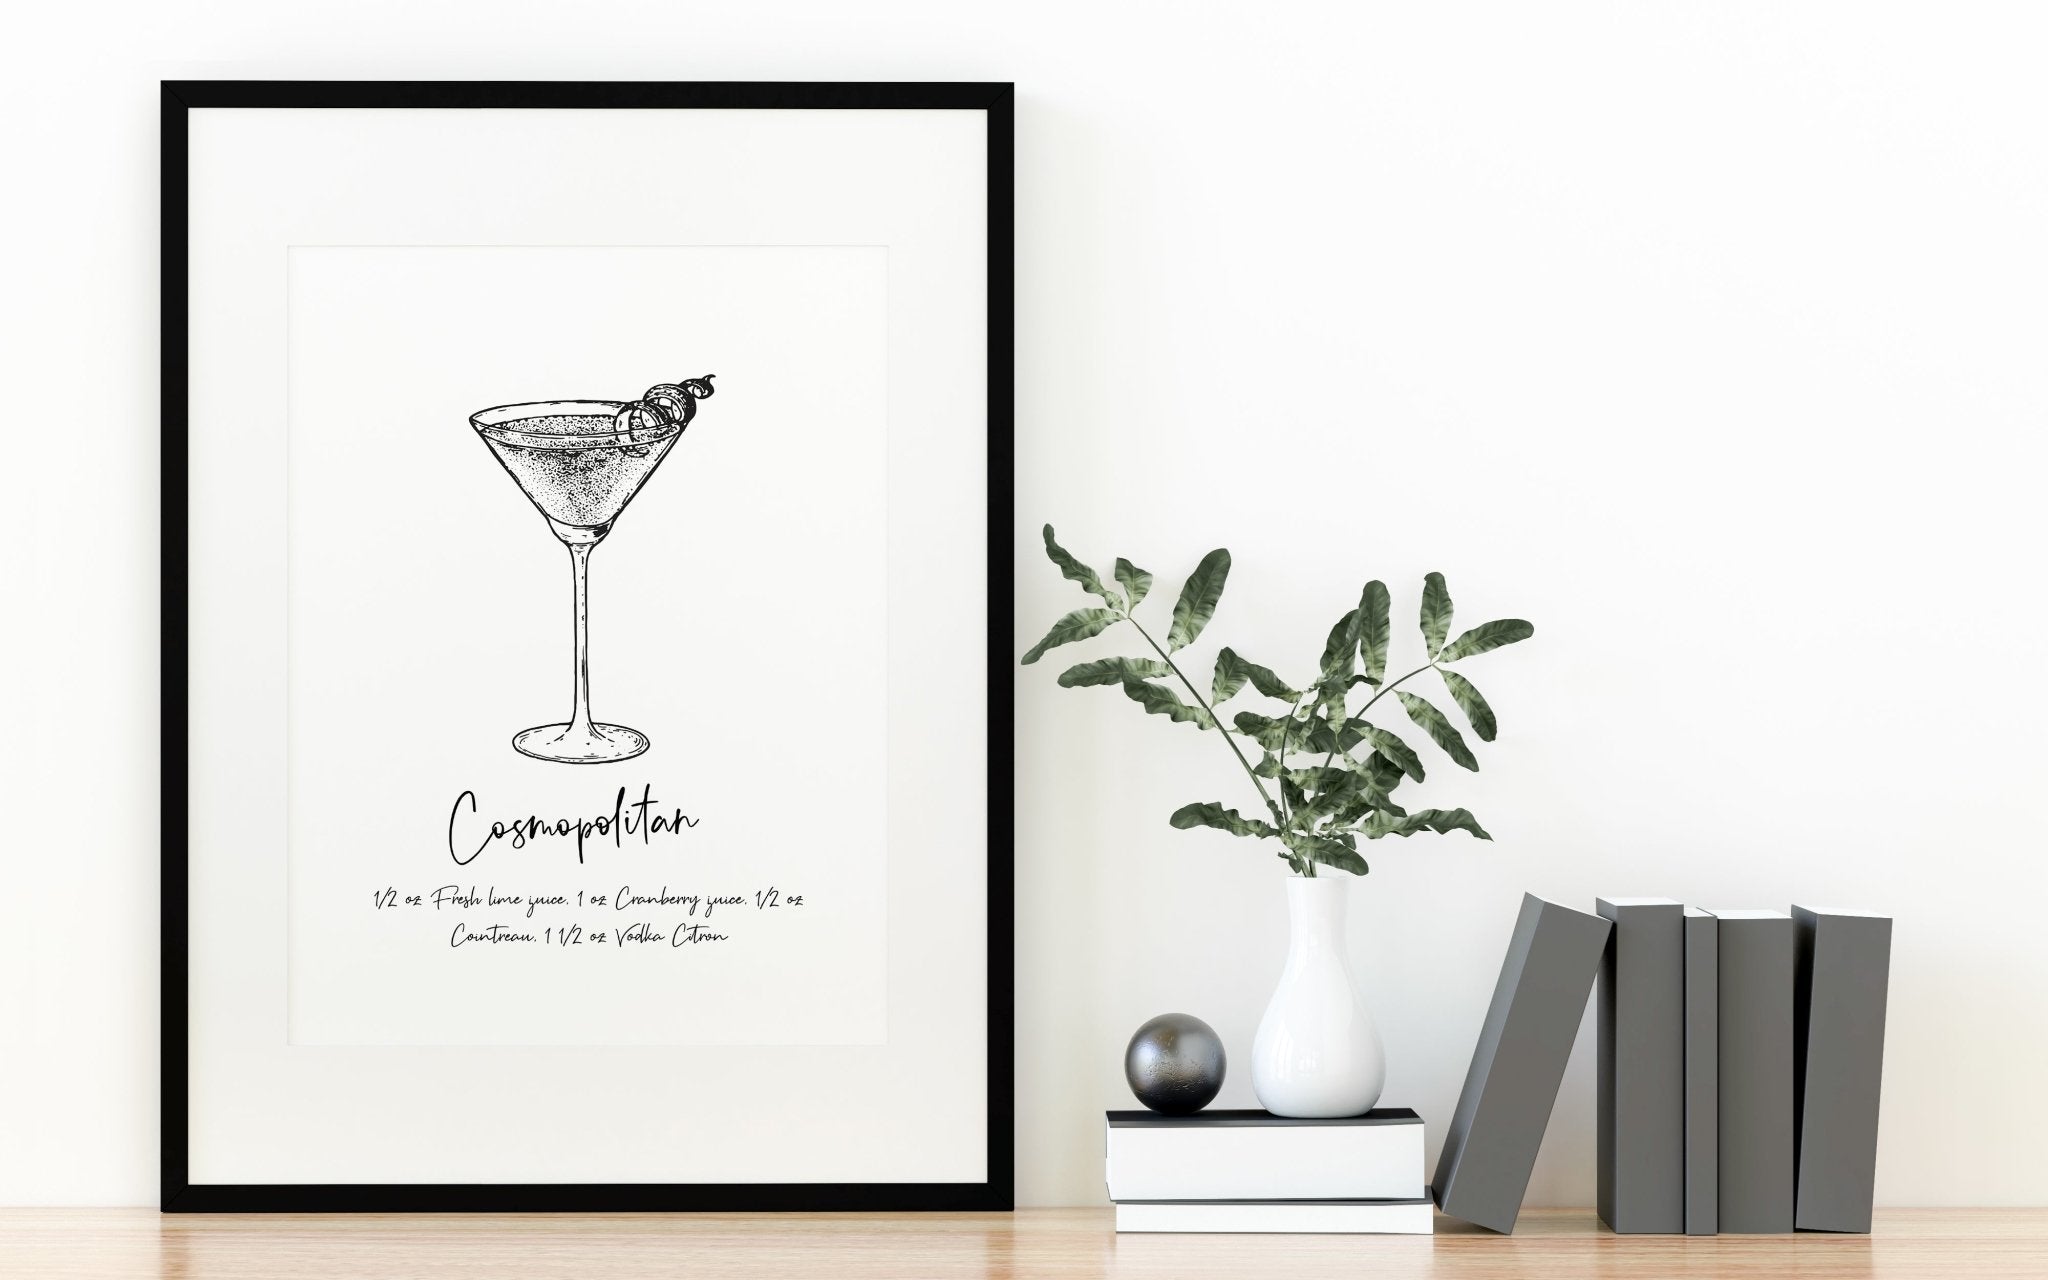 Cosmo Cocktail Recipe Print